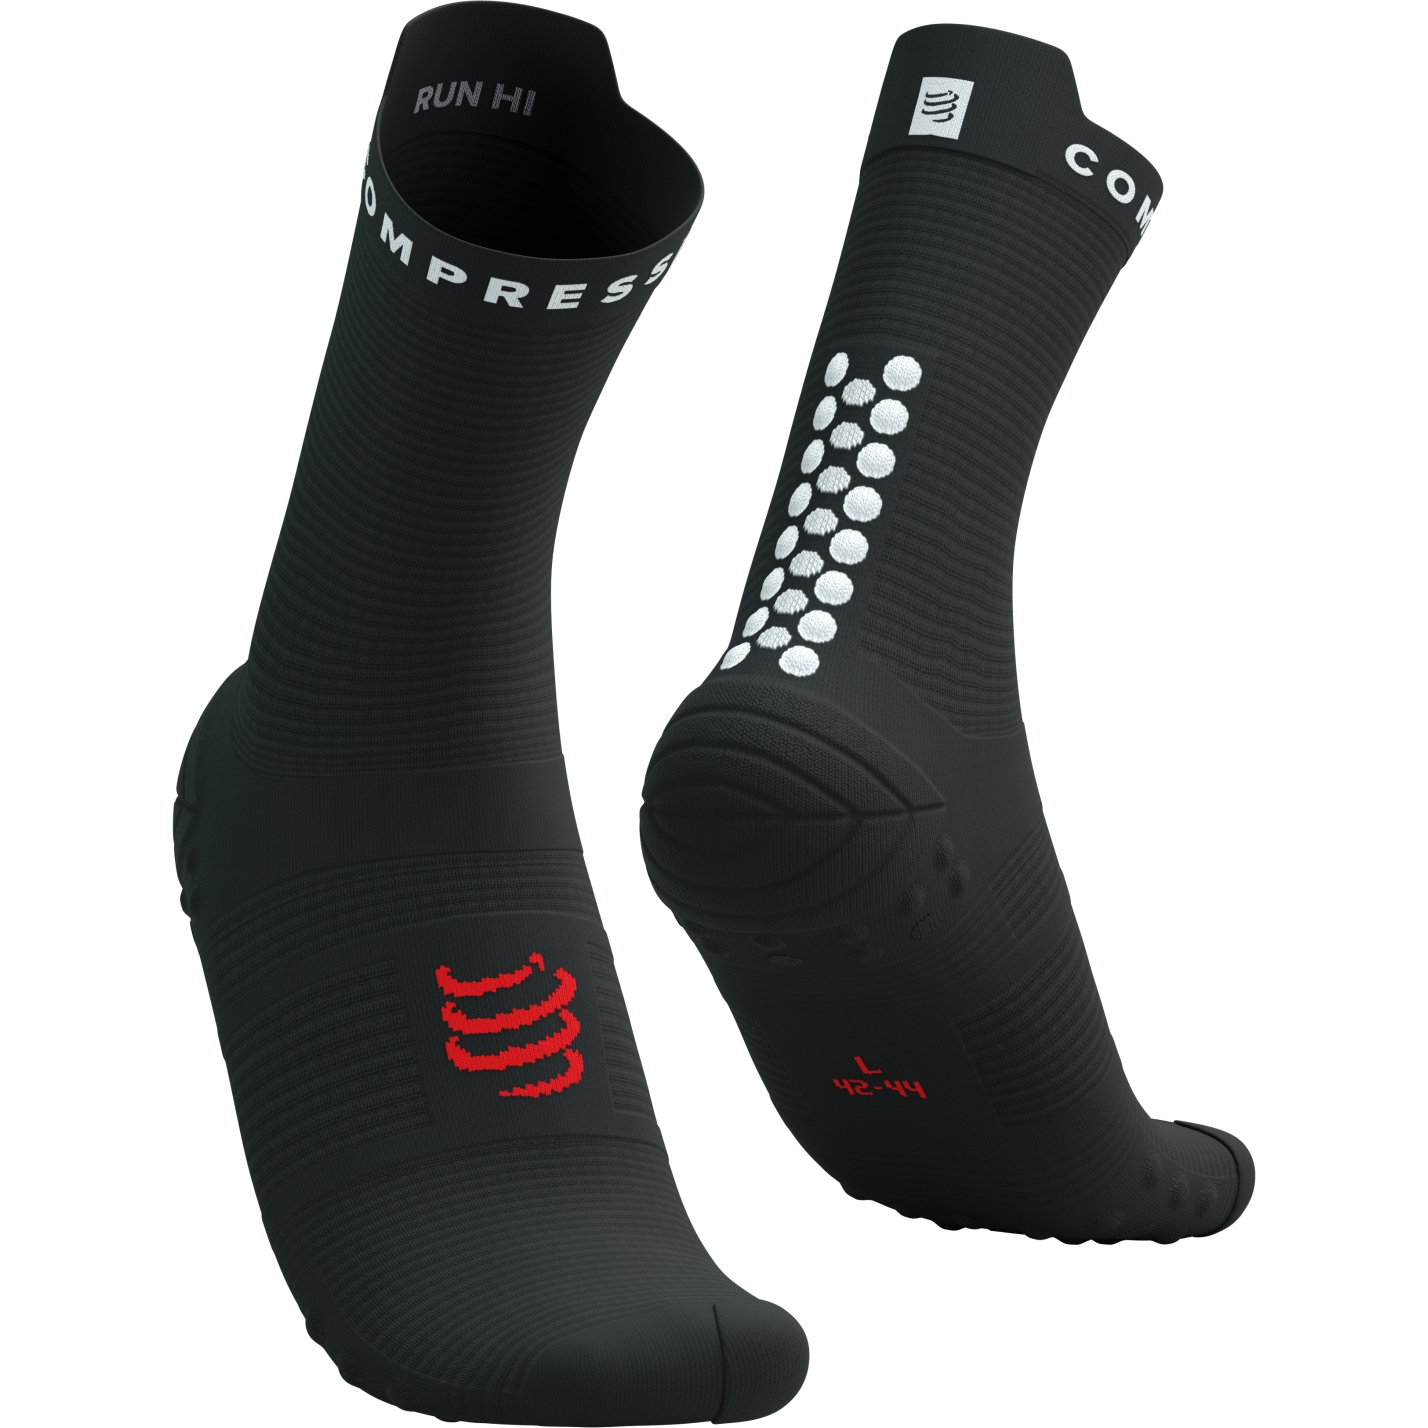 Picture of Compressport Pro Racing Compression Socks v4.0 Run High - black/white/core red